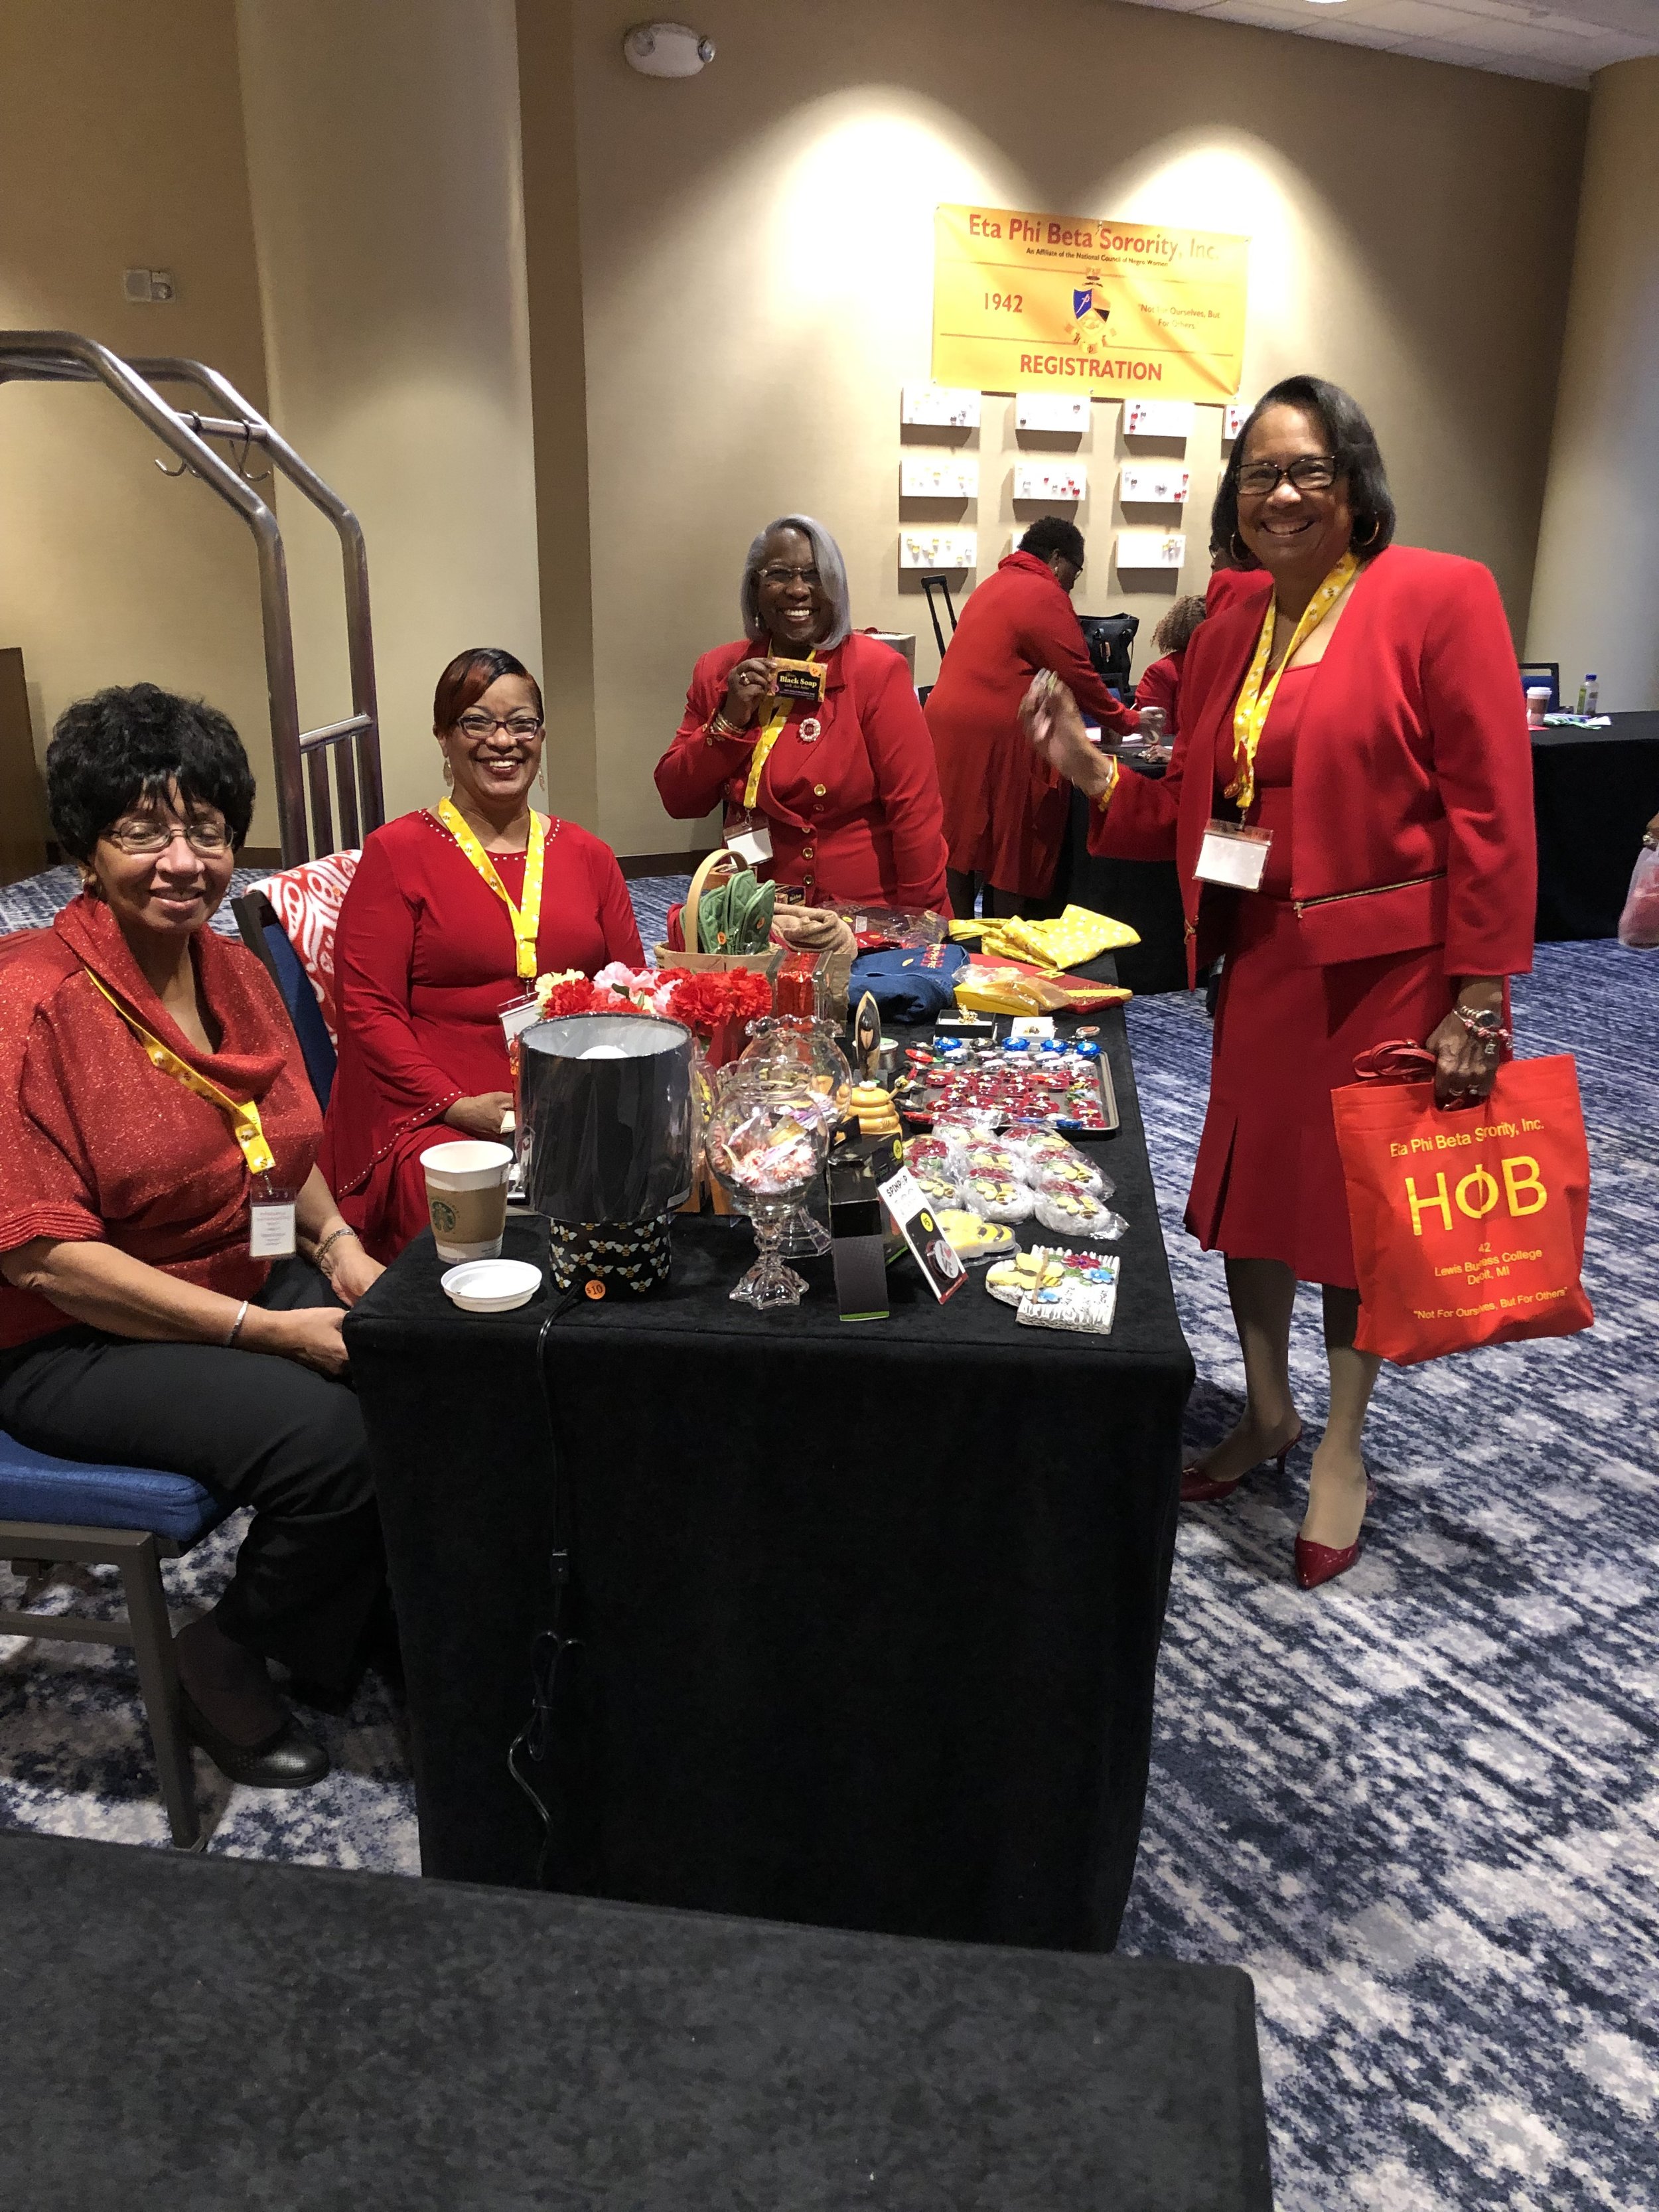  Alpha Theta’s vending table at the Grand Executive Board Meeting, Arlington, VA, March 2019 